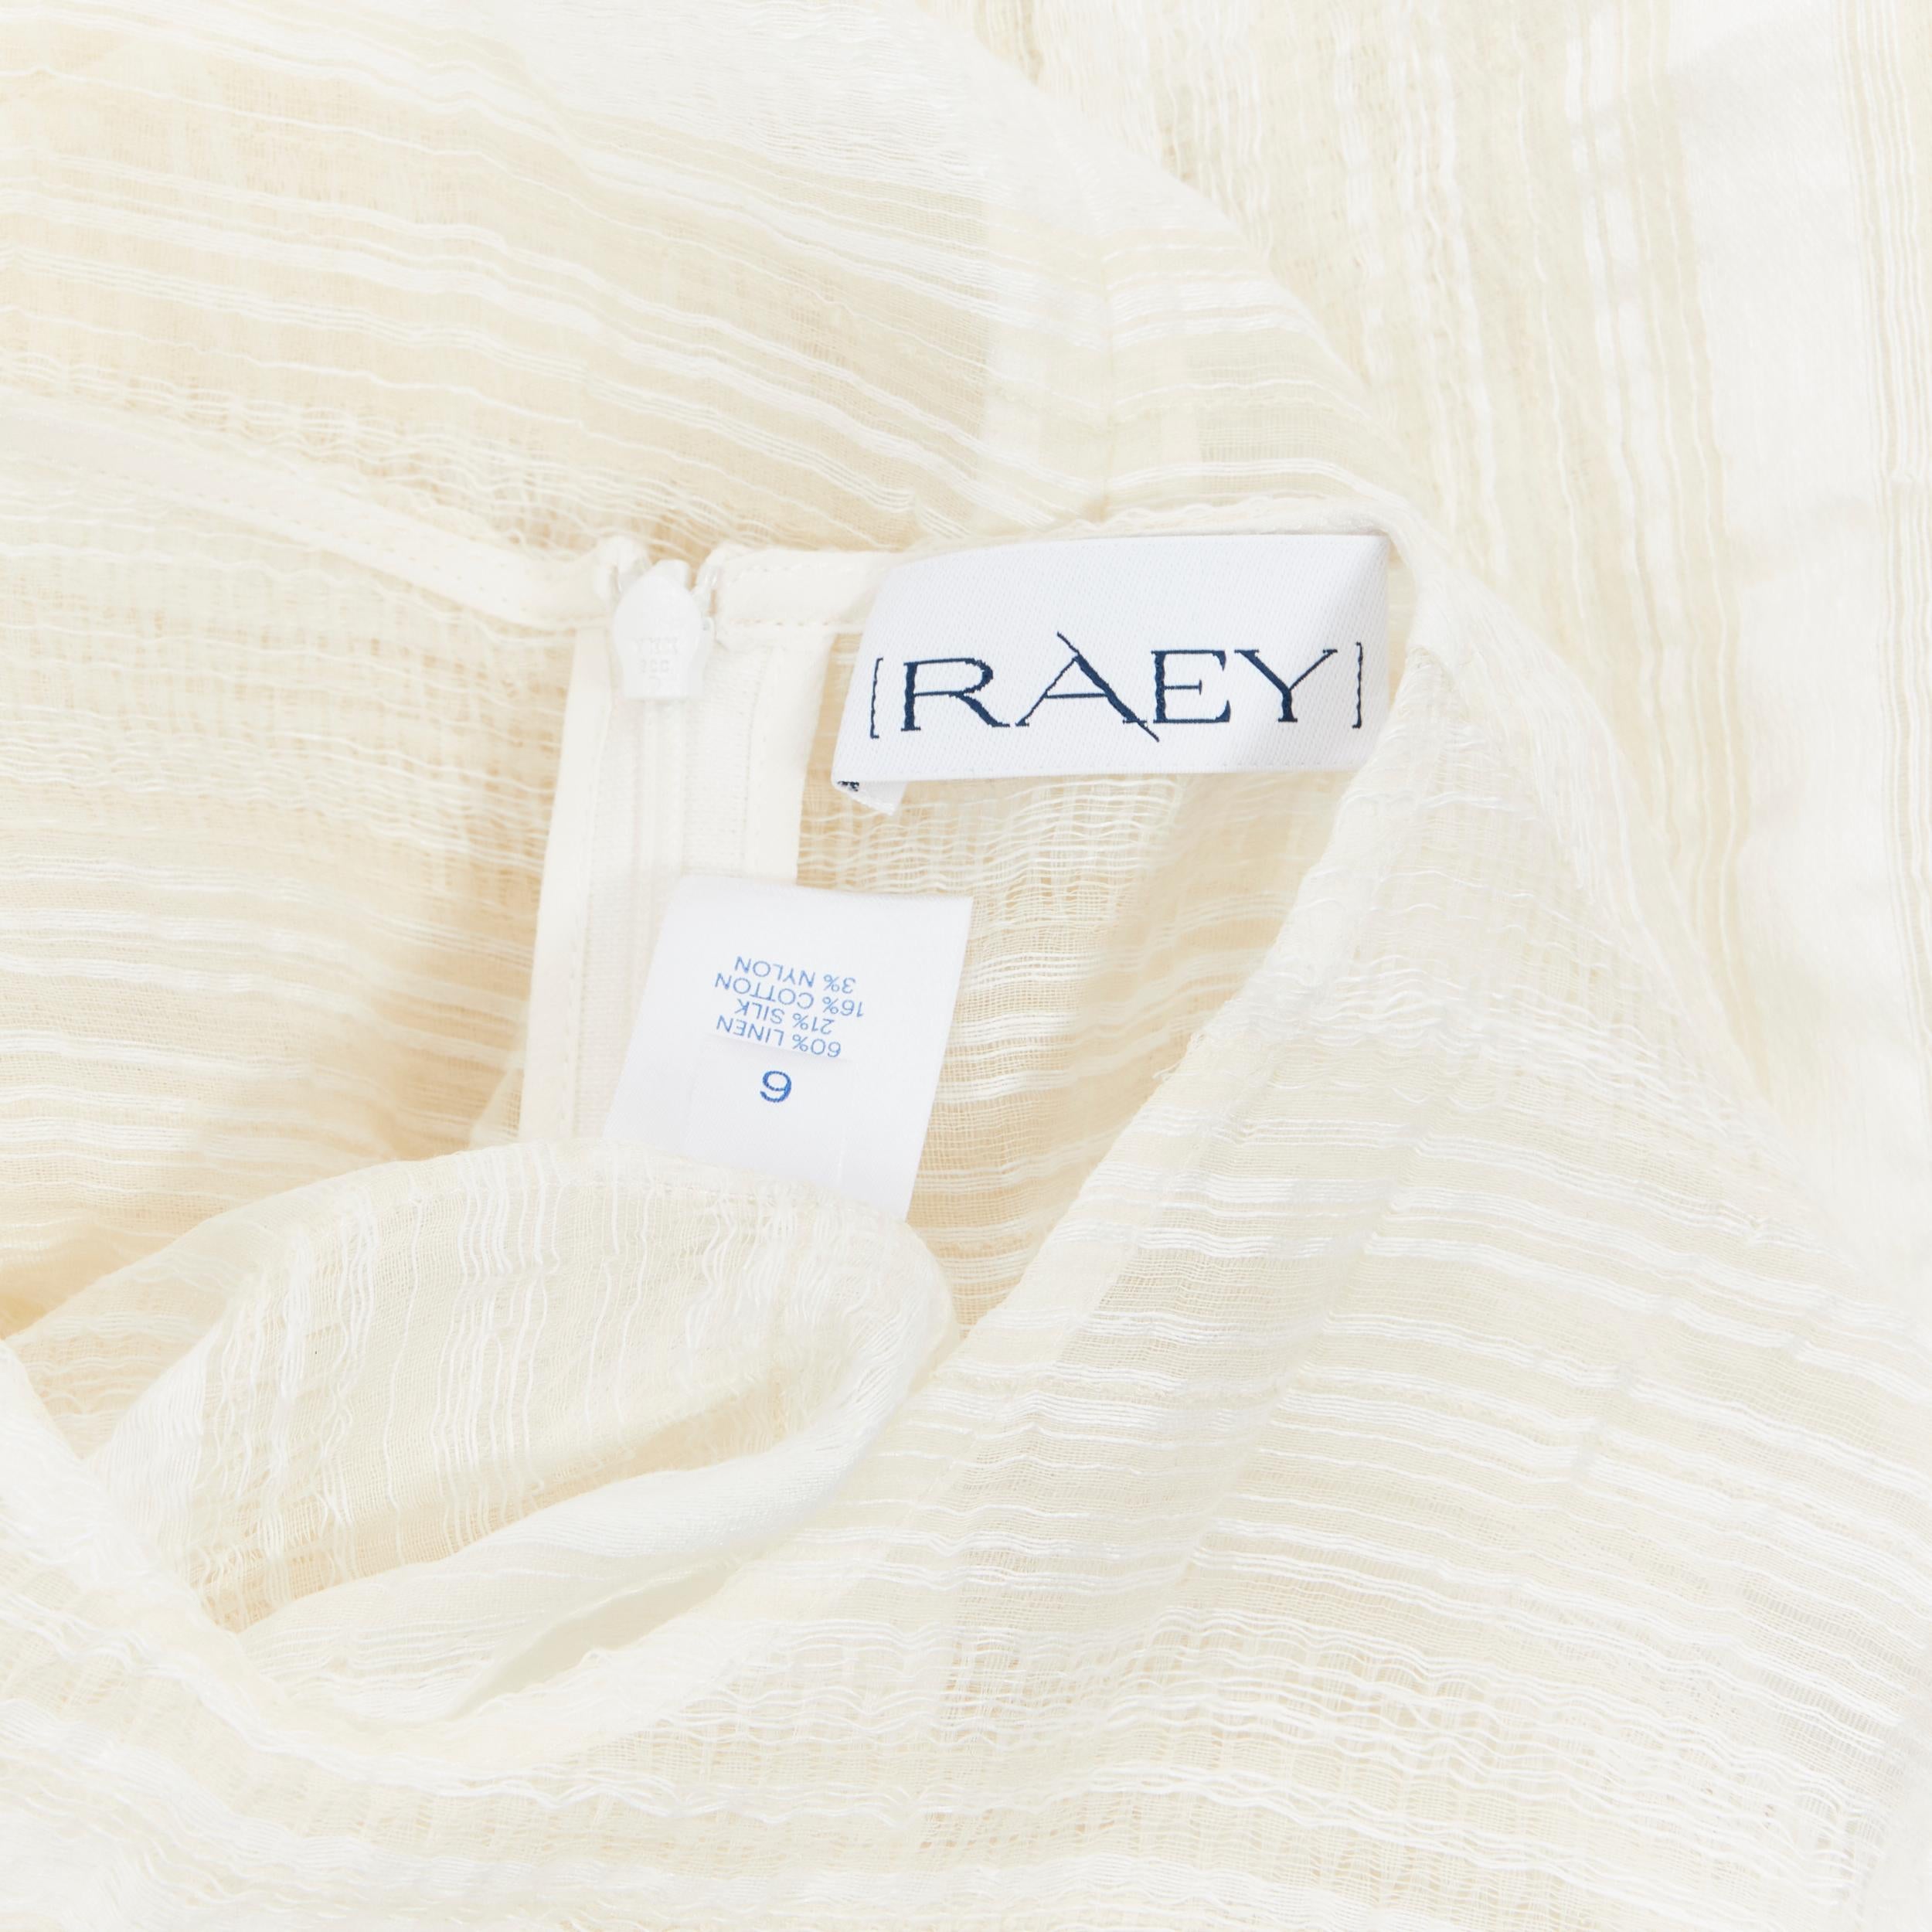 RAEY beige striped textured muslin semi sheer midi casual day dress UK6 XS 1